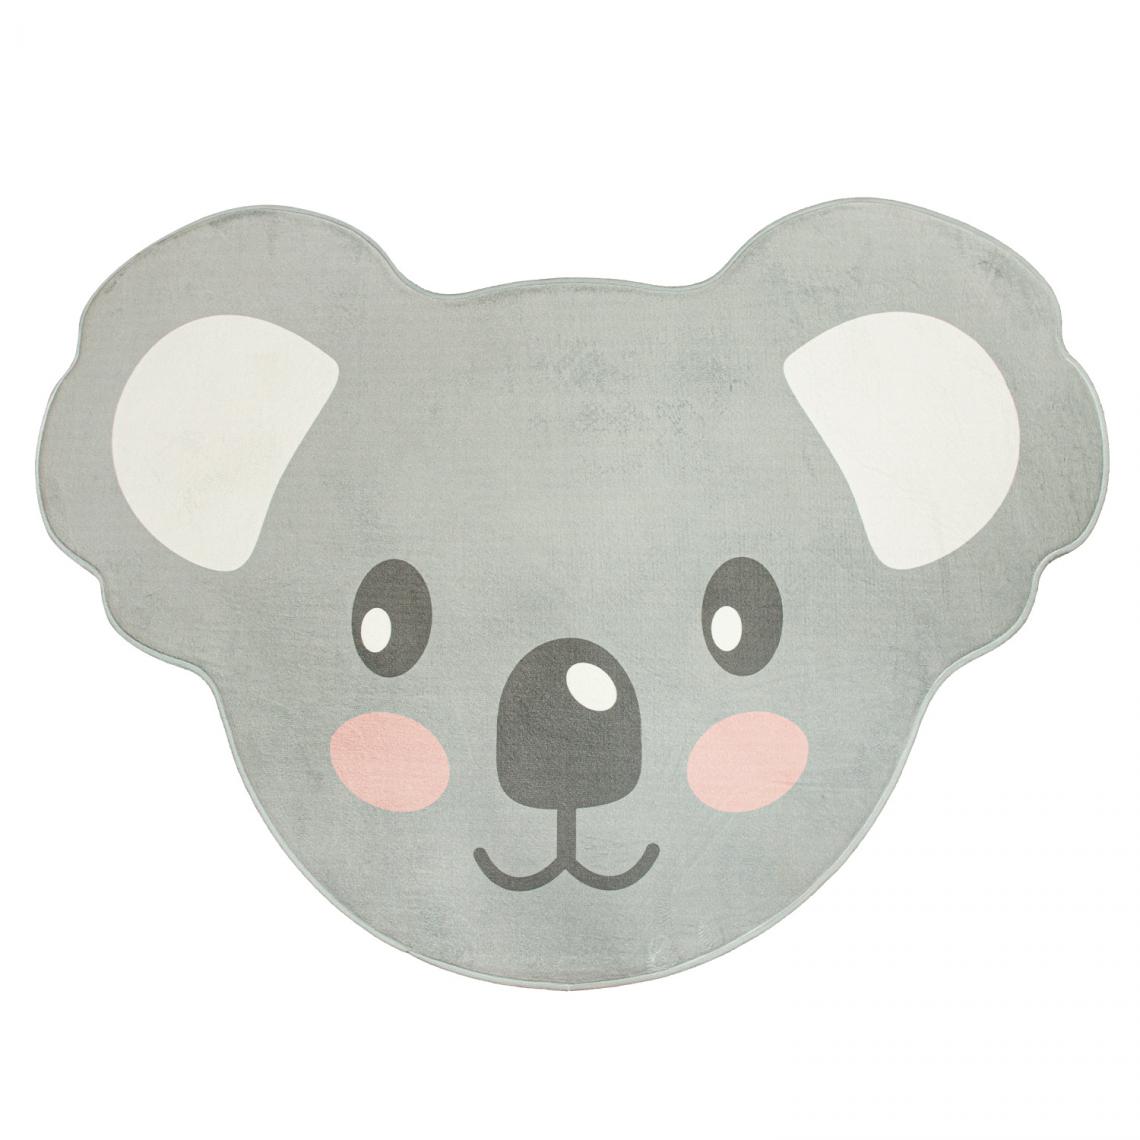 Paco-Home - Tapis Chambre Enfant Tapis De Jeux Tapis Bébé Motif Animal Koala Motif Gris - Tapis